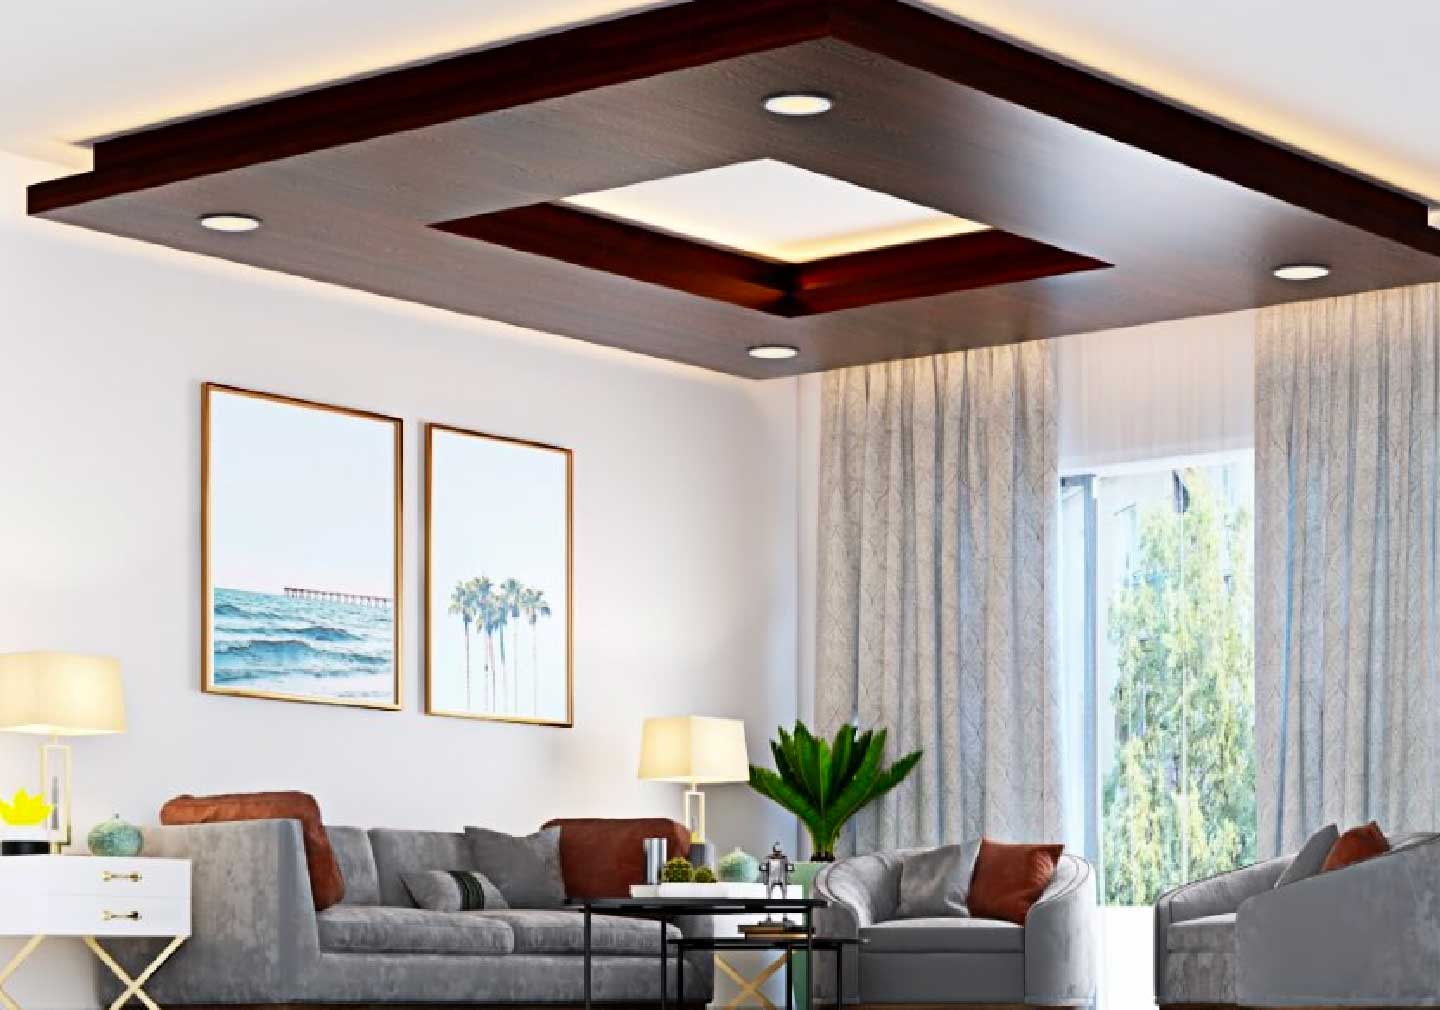 Wooden False Ceiling Design Ideas